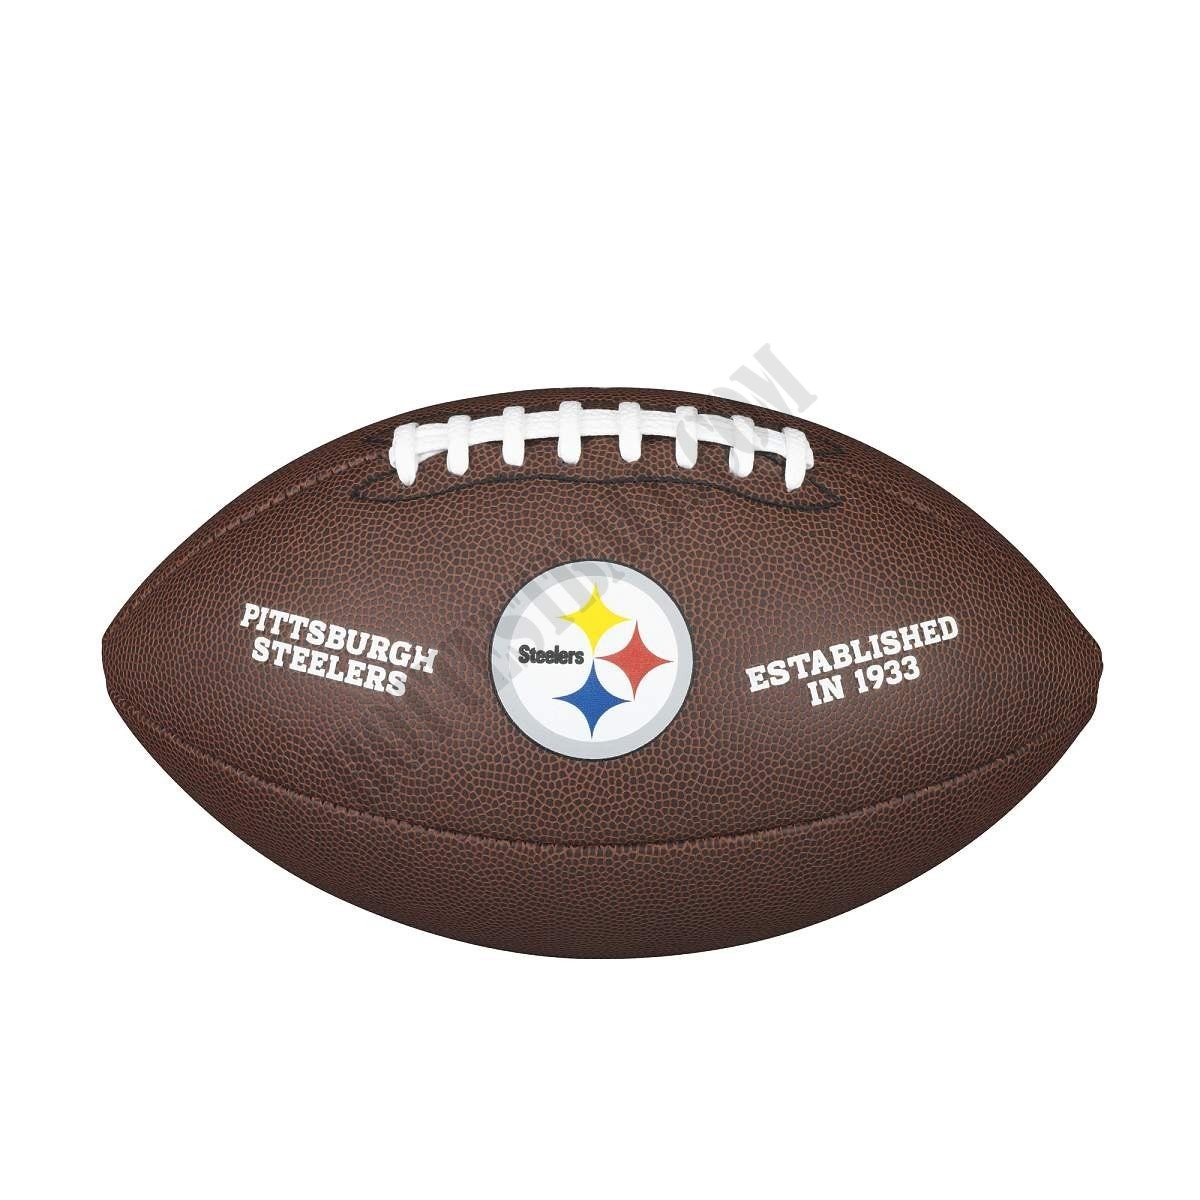 NFL Backyard Legend Football - Pittsburgh Steelers ● Wilson Promotions - NFL Backyard Legend Football - Pittsburgh Steelers ● Wilson Promotions